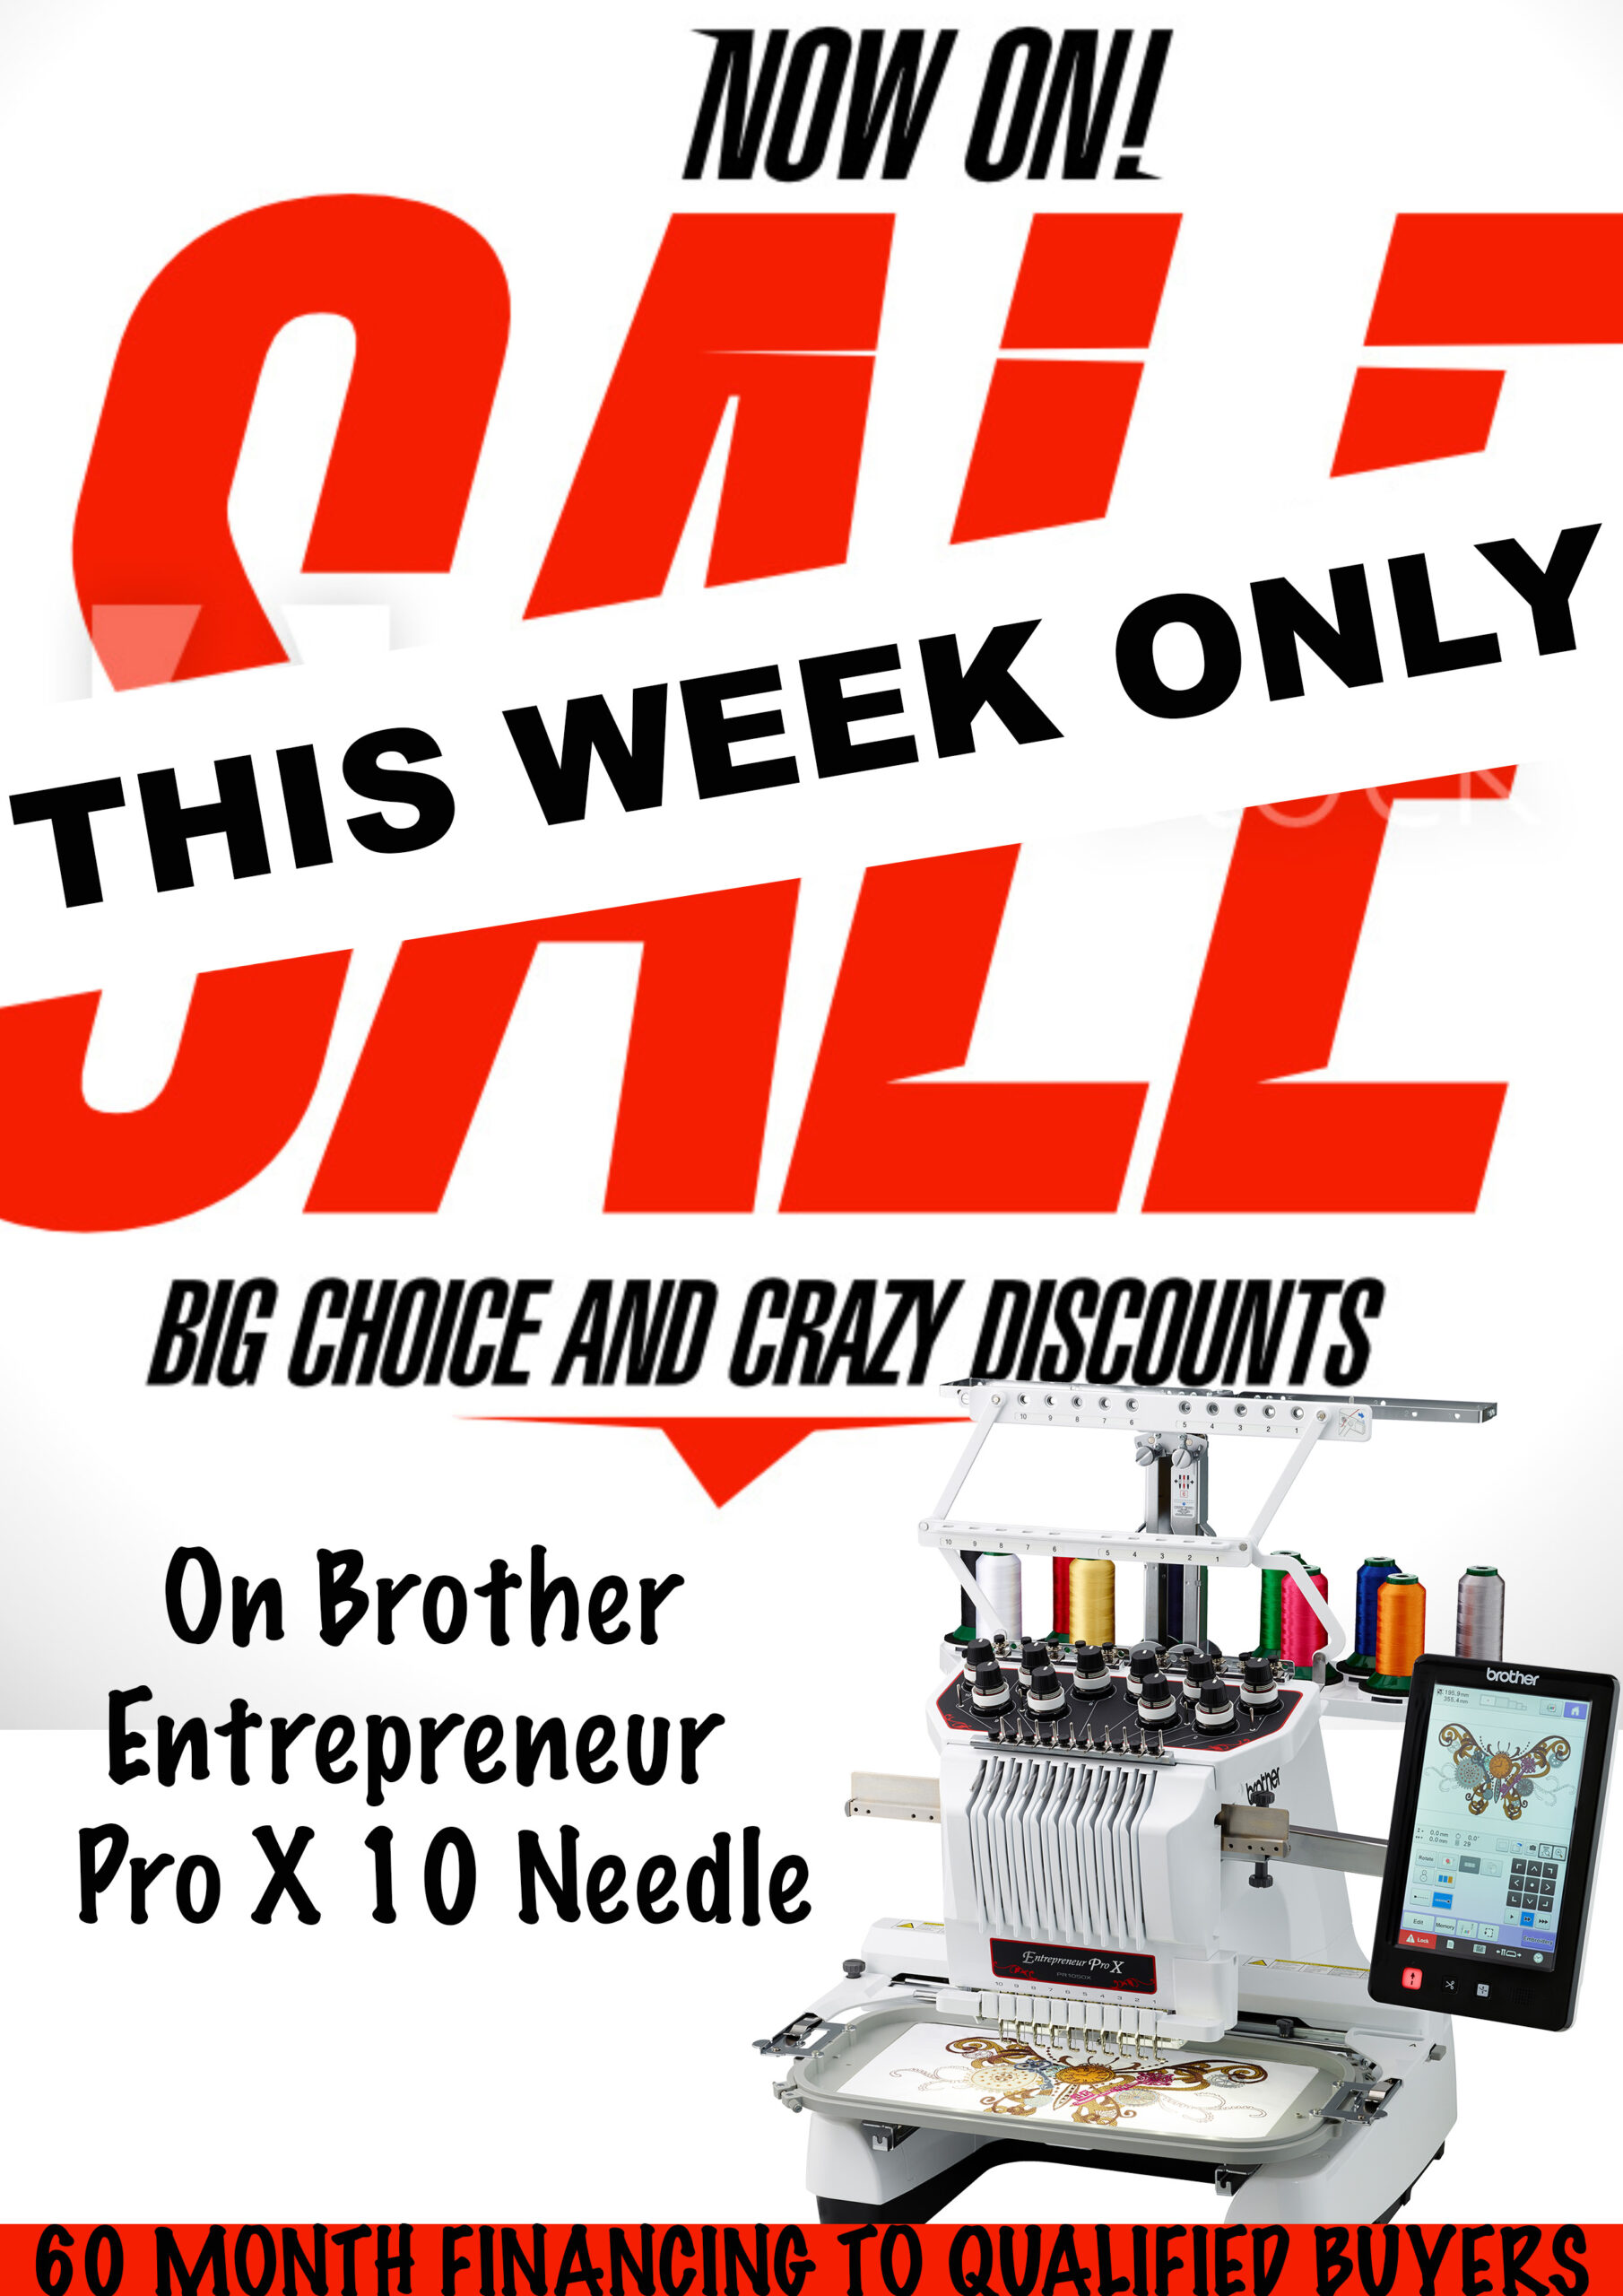 December sale 10 needle